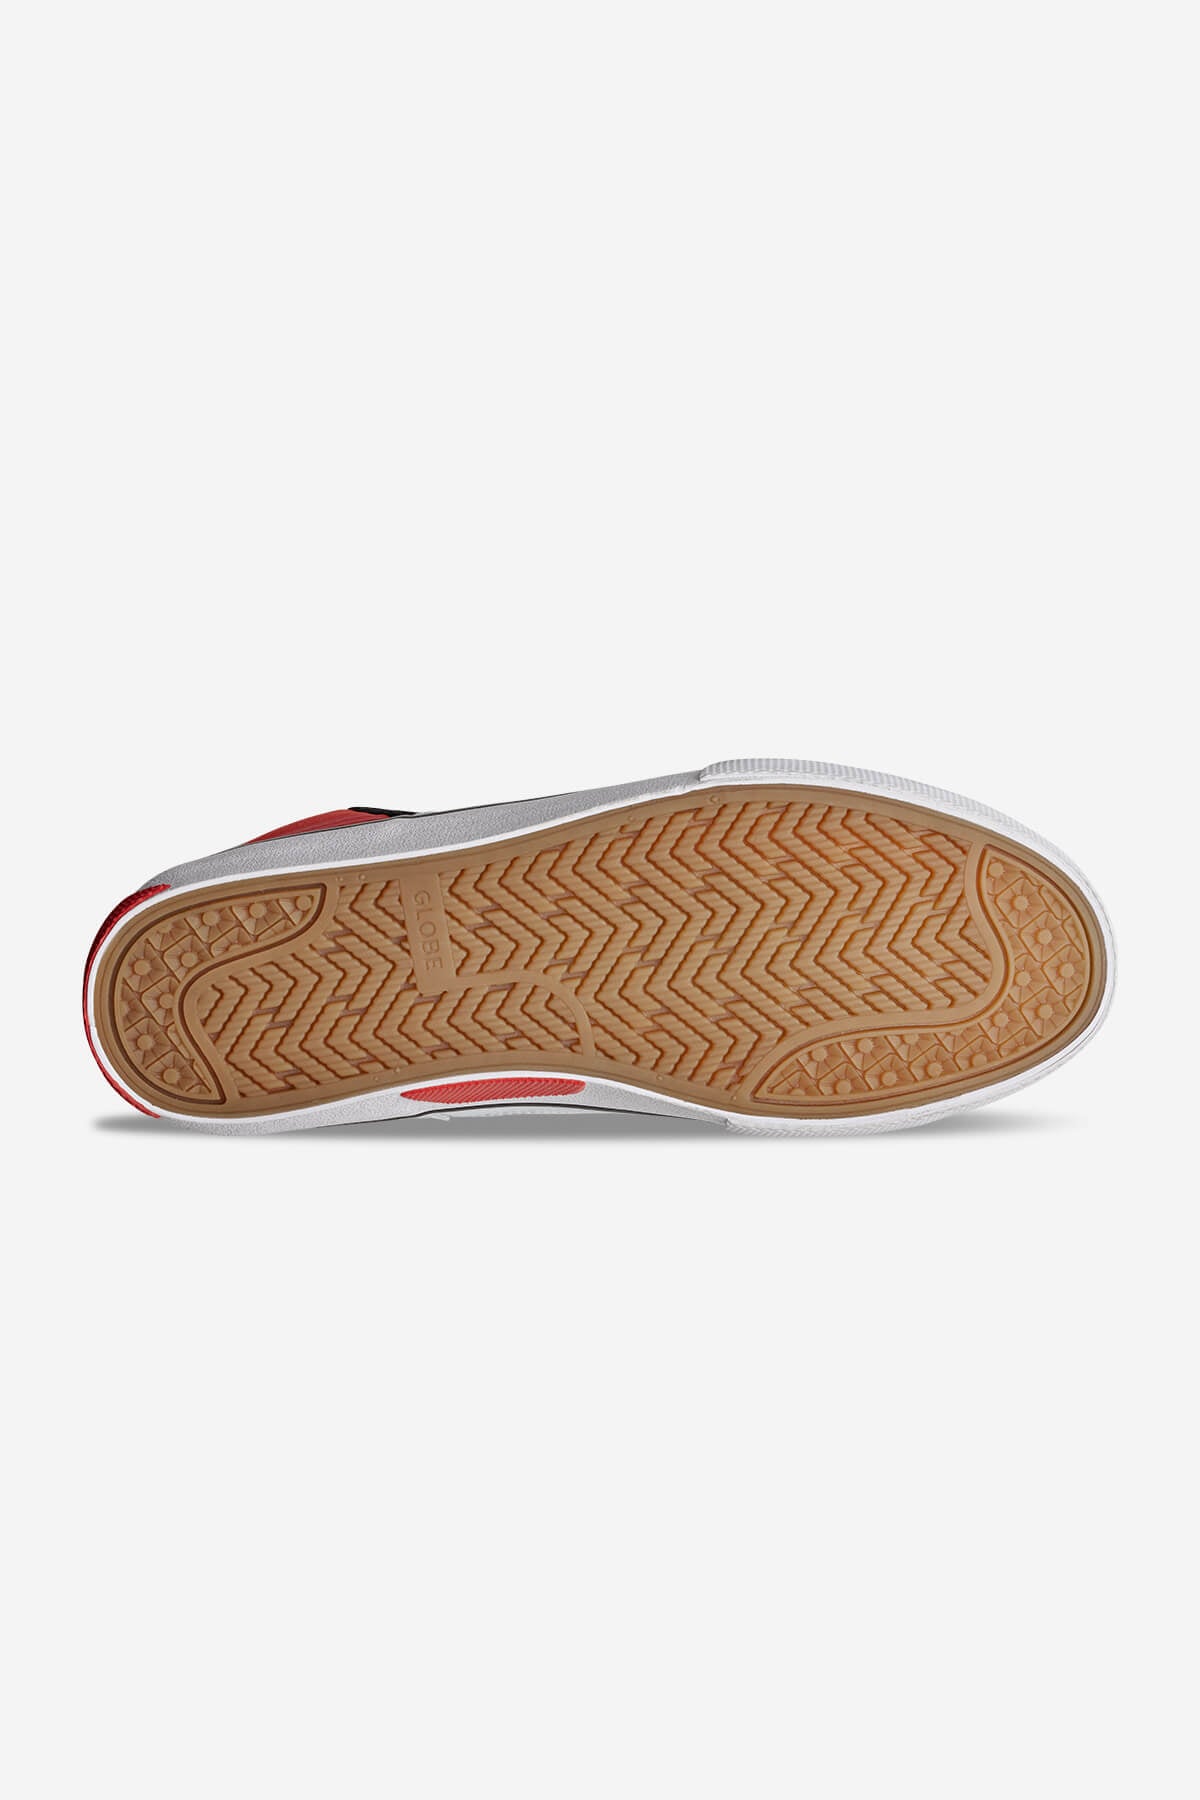 Globe - Dimension - White/Negro/Red - skateboard Zapatos